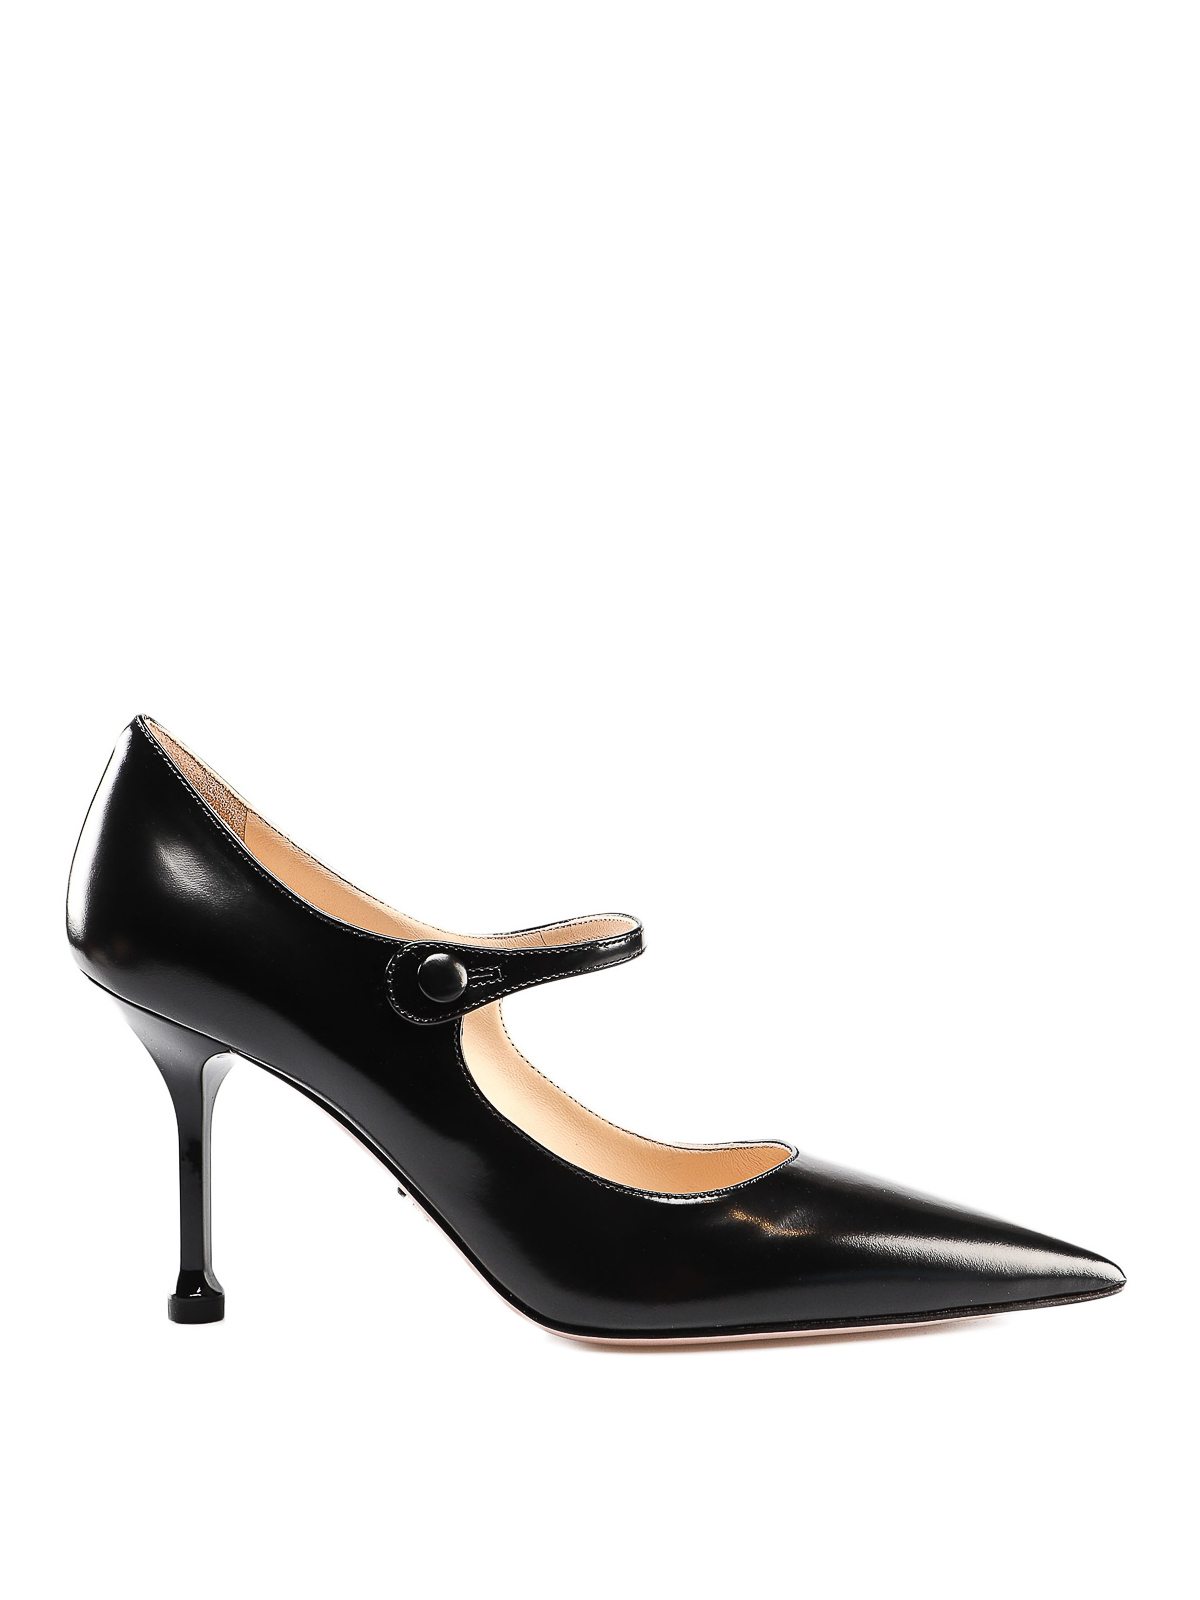 Prada - Black polished leather Mary Jane pumps - court shoes - 1I491L055002